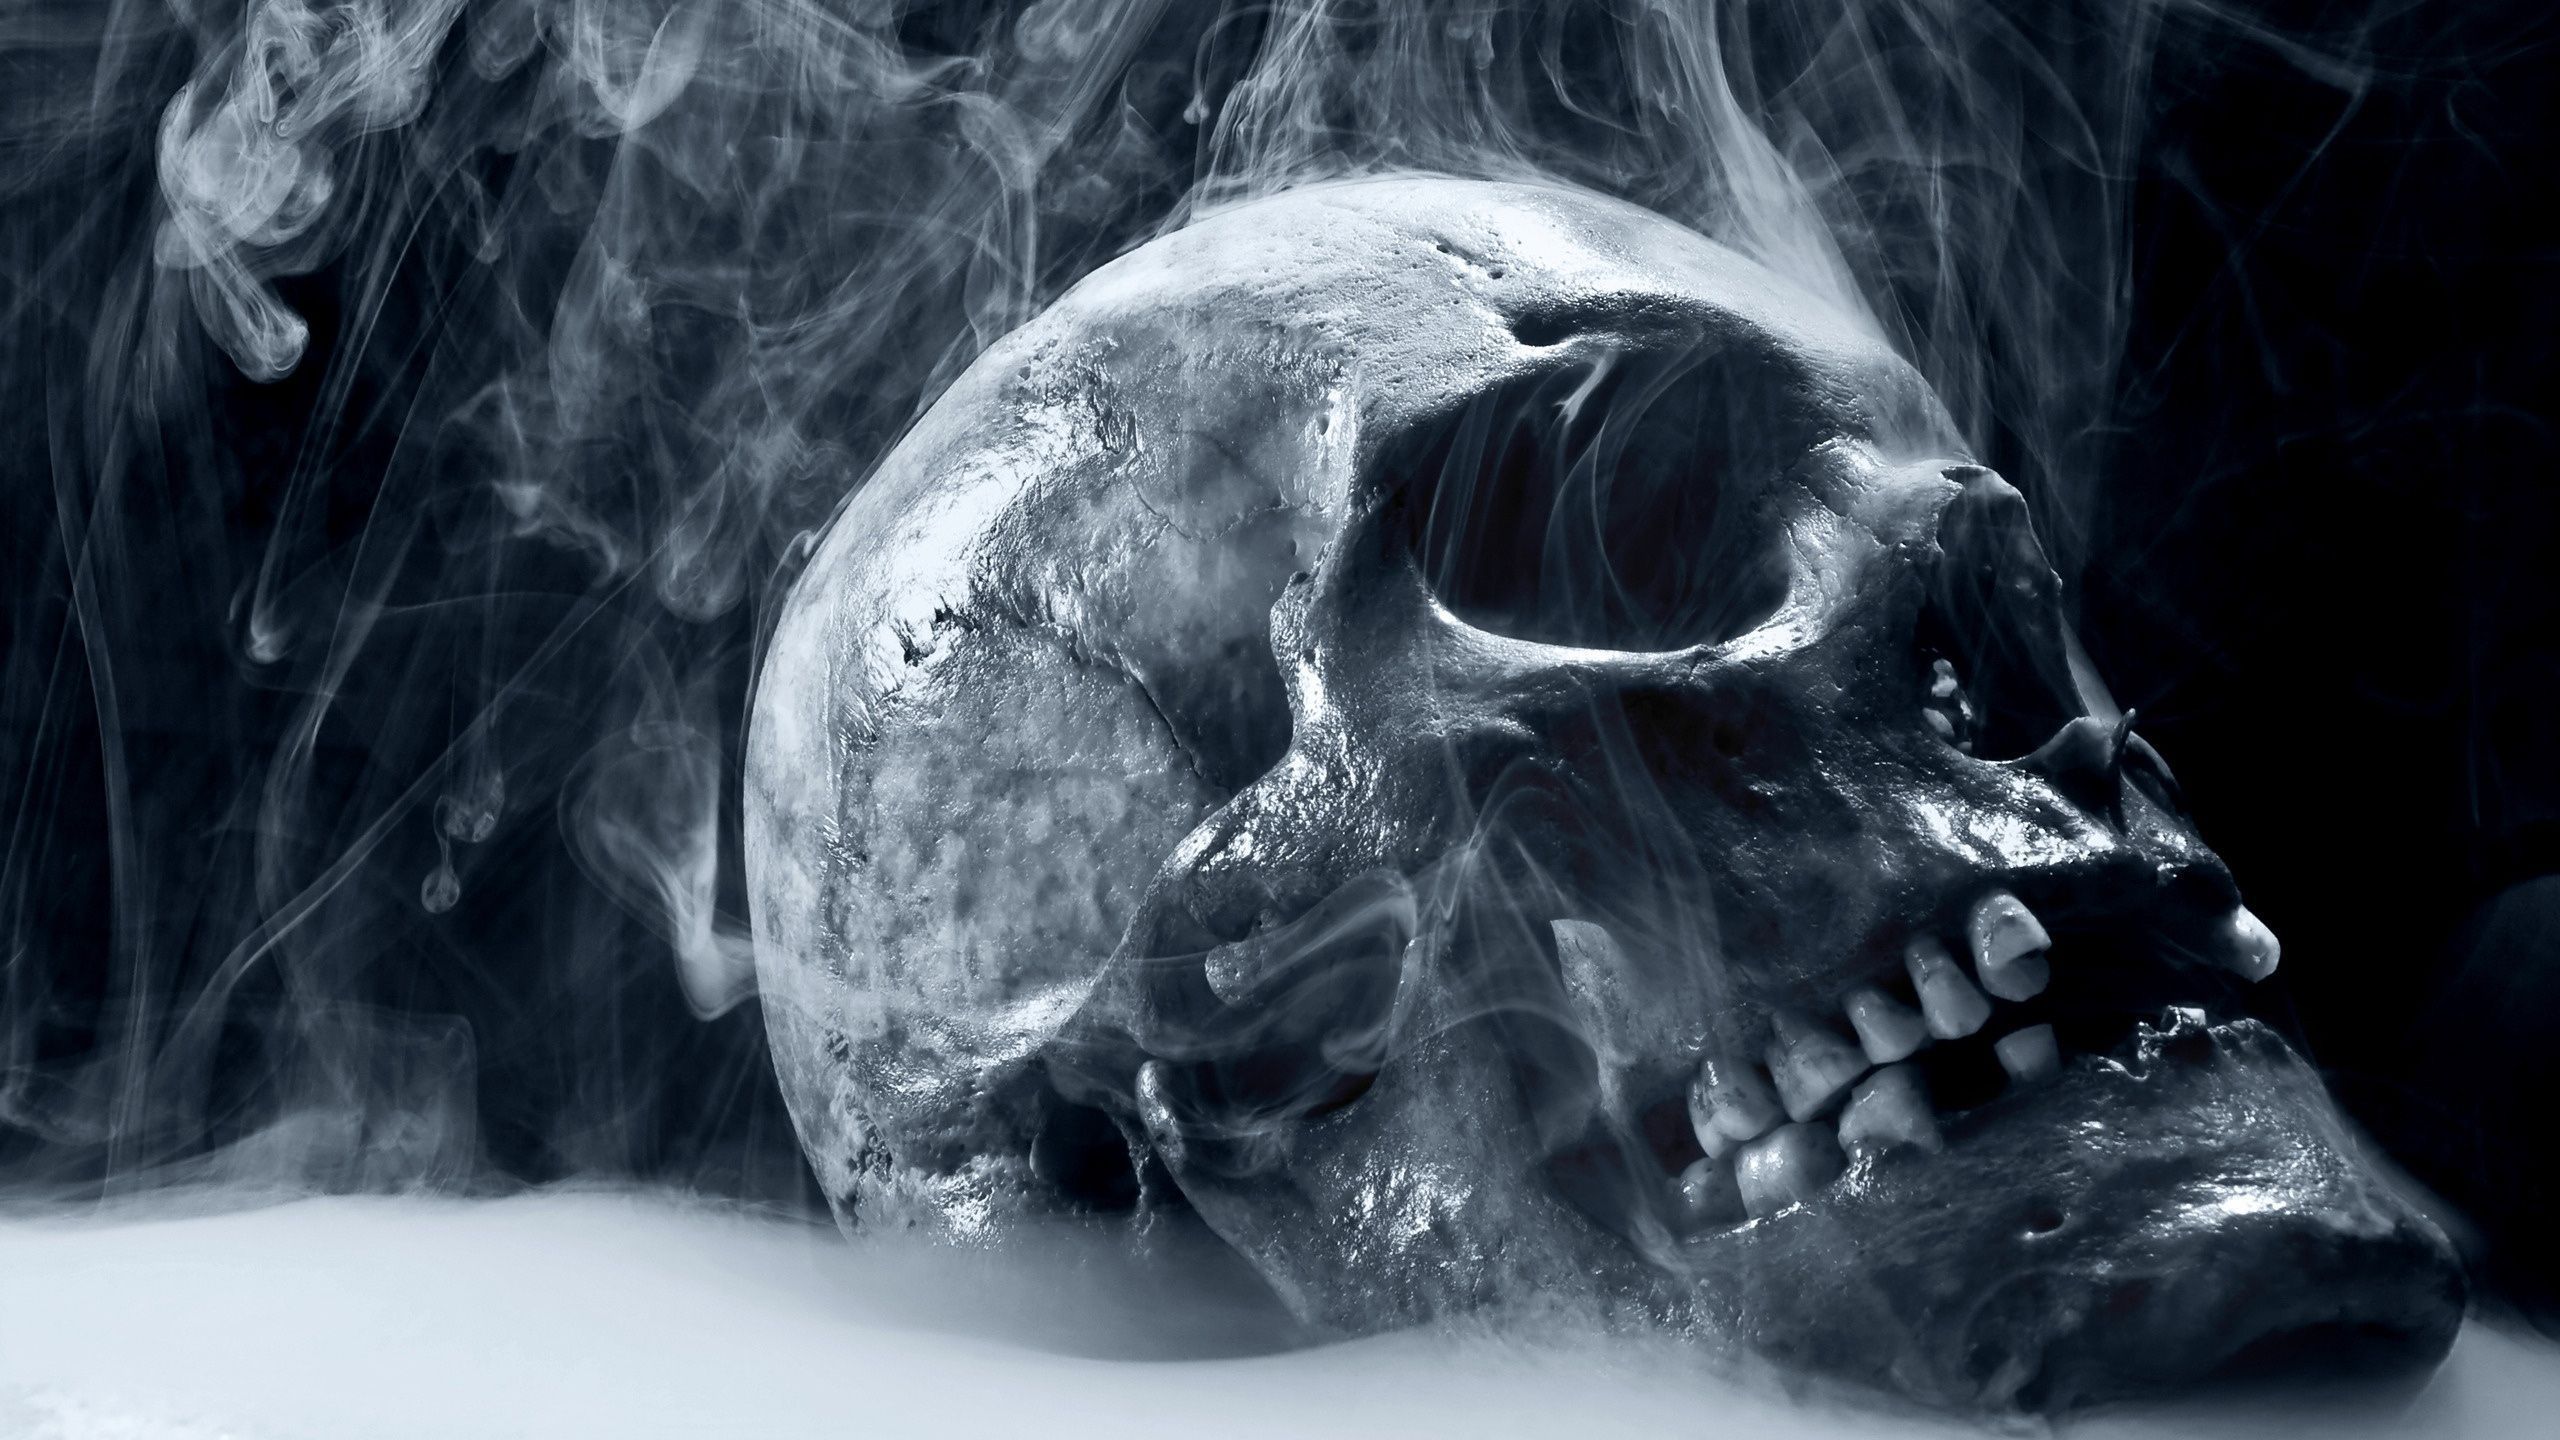 Gothic / Dark Art: Skull Smoking, picture nr. 61171